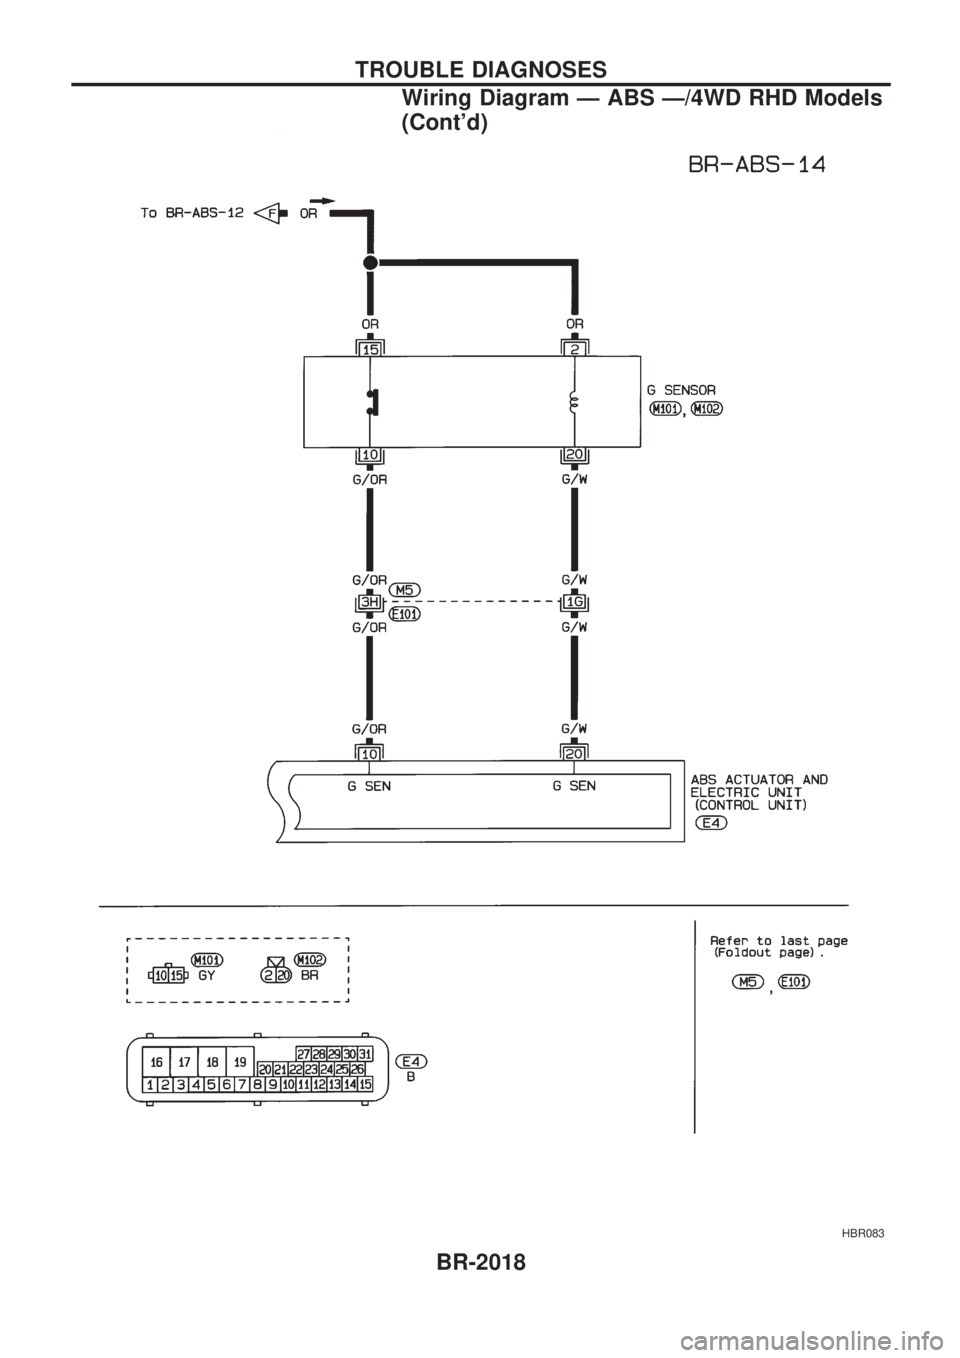 NISSAN PICK-UP 1999  Repair Manual HBR083
TROUBLE DIAGNOSES
Wiring Diagram Ð ABS Ð/4WD RHD Models
(Contd)
BR-2018 